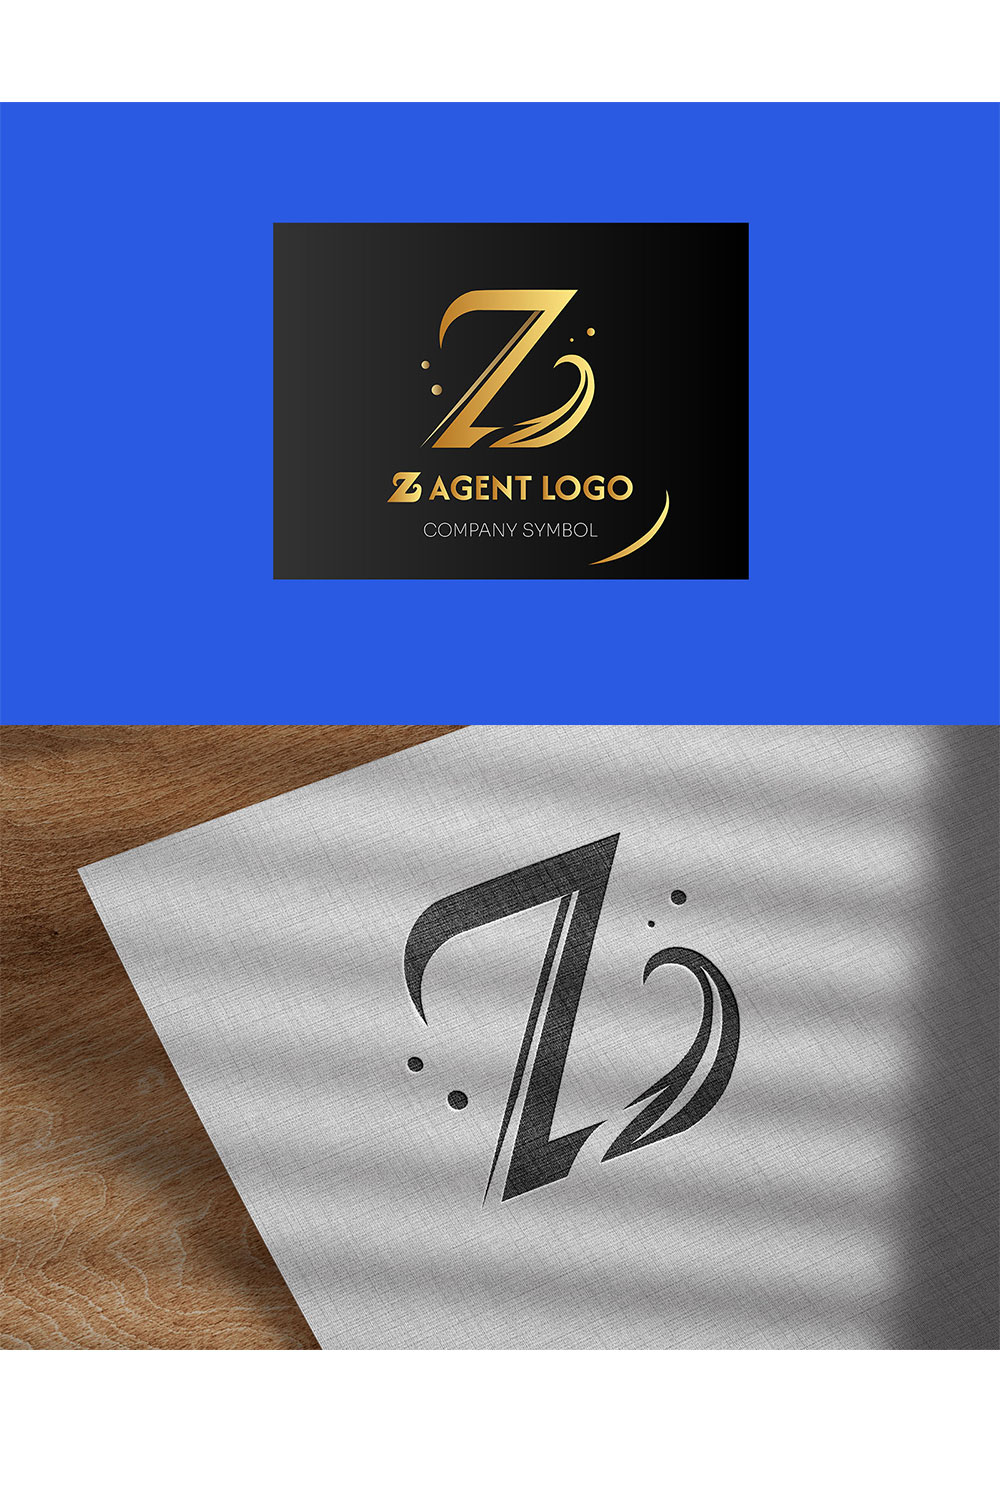 Z Logo Design || Number 01 Editable Logo Template pinterest preview image.